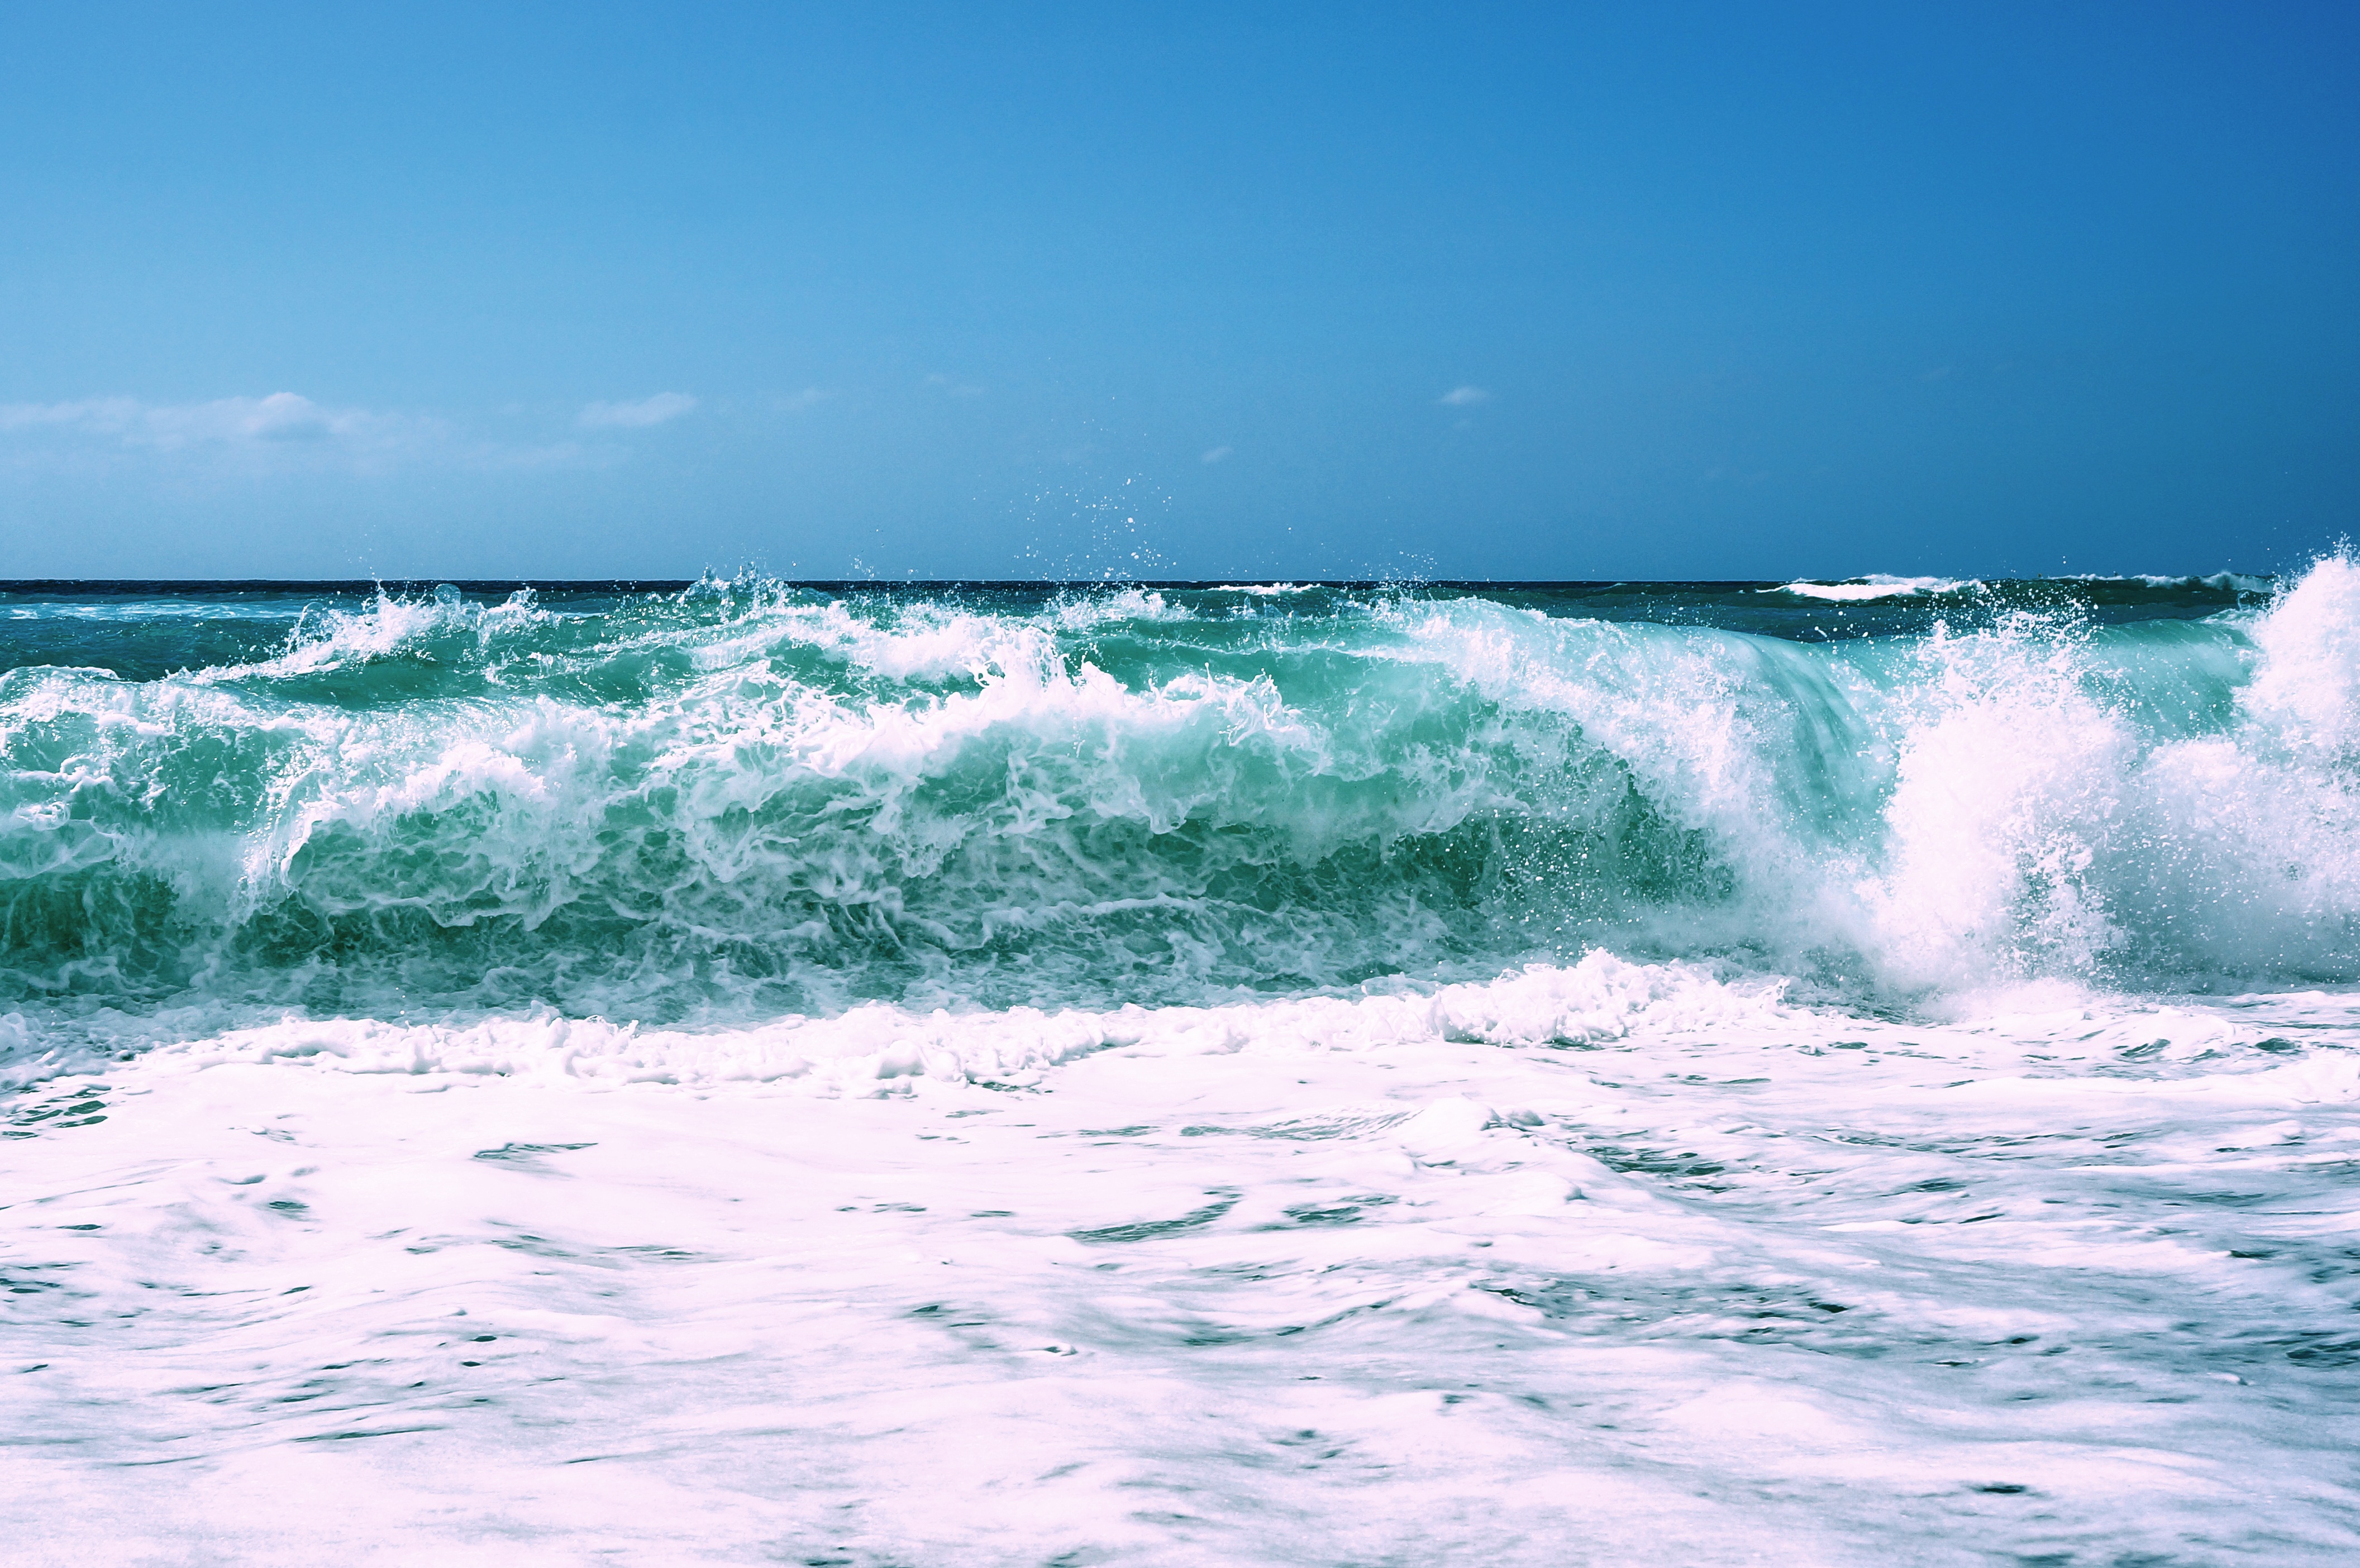 Waves on the seashore seascape image - Free stock photo - Public Domain ...